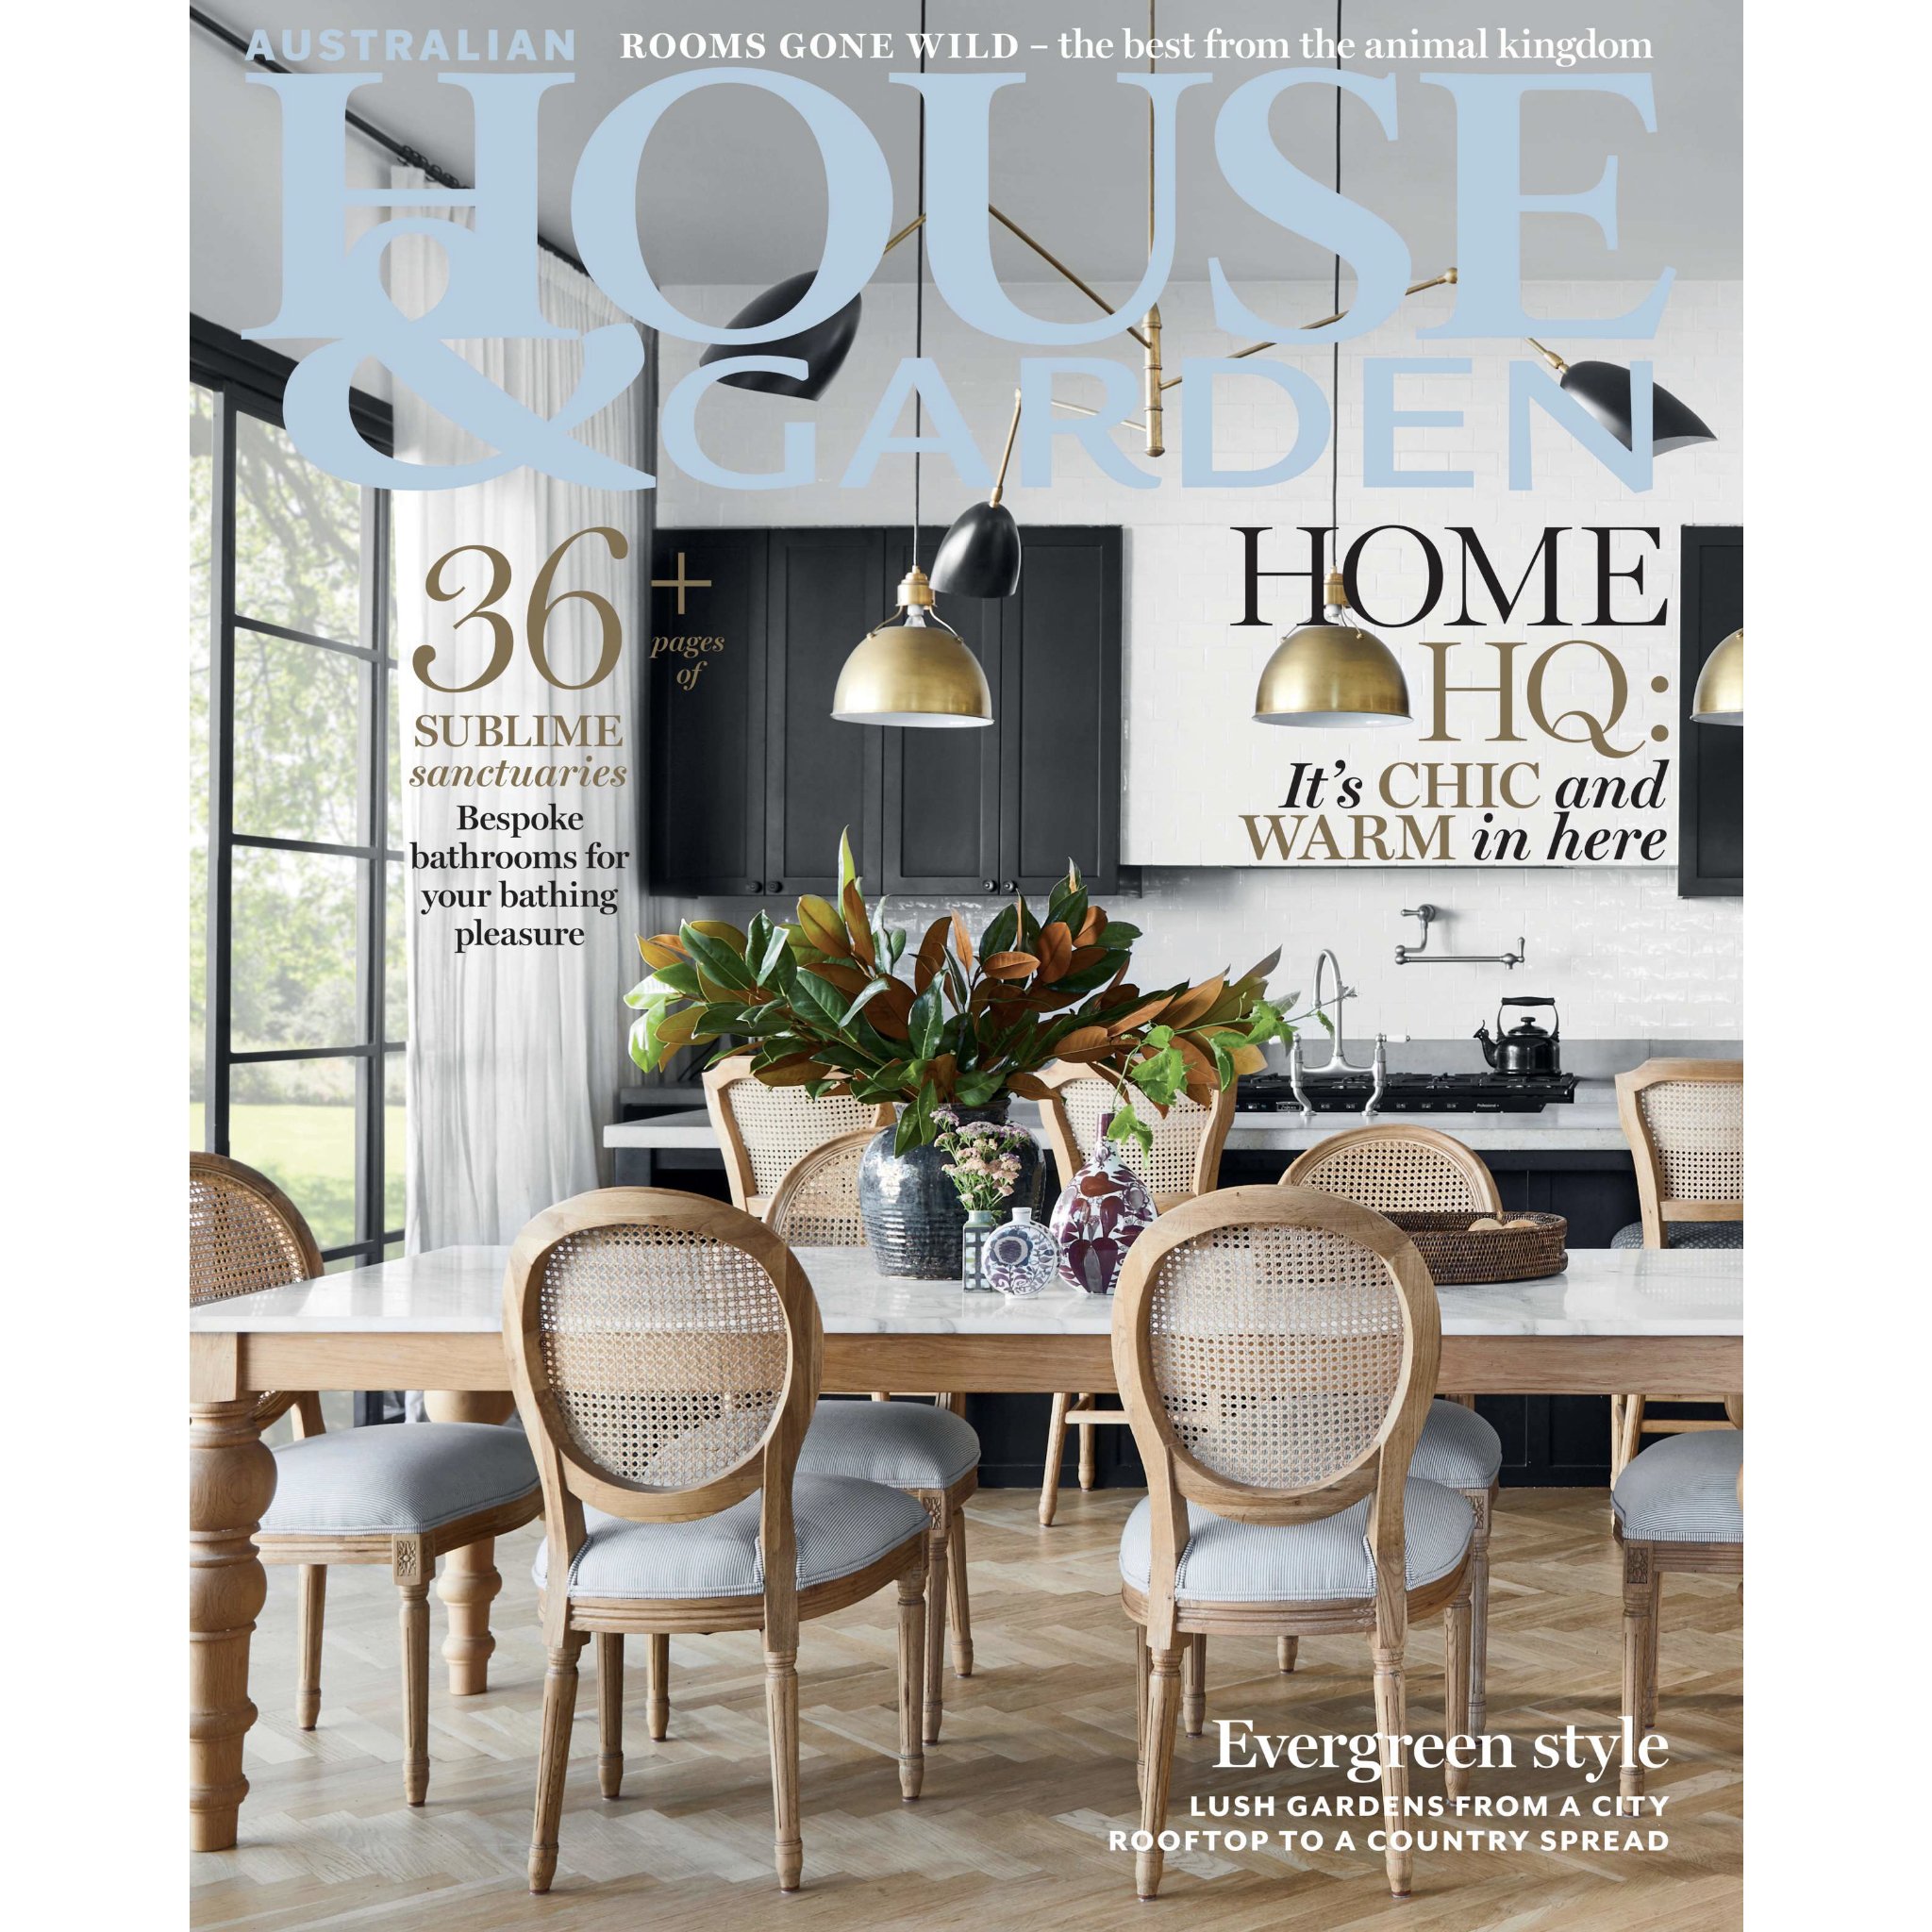 Press | North Bondi House | Josephine Hurley Architecture.jpg